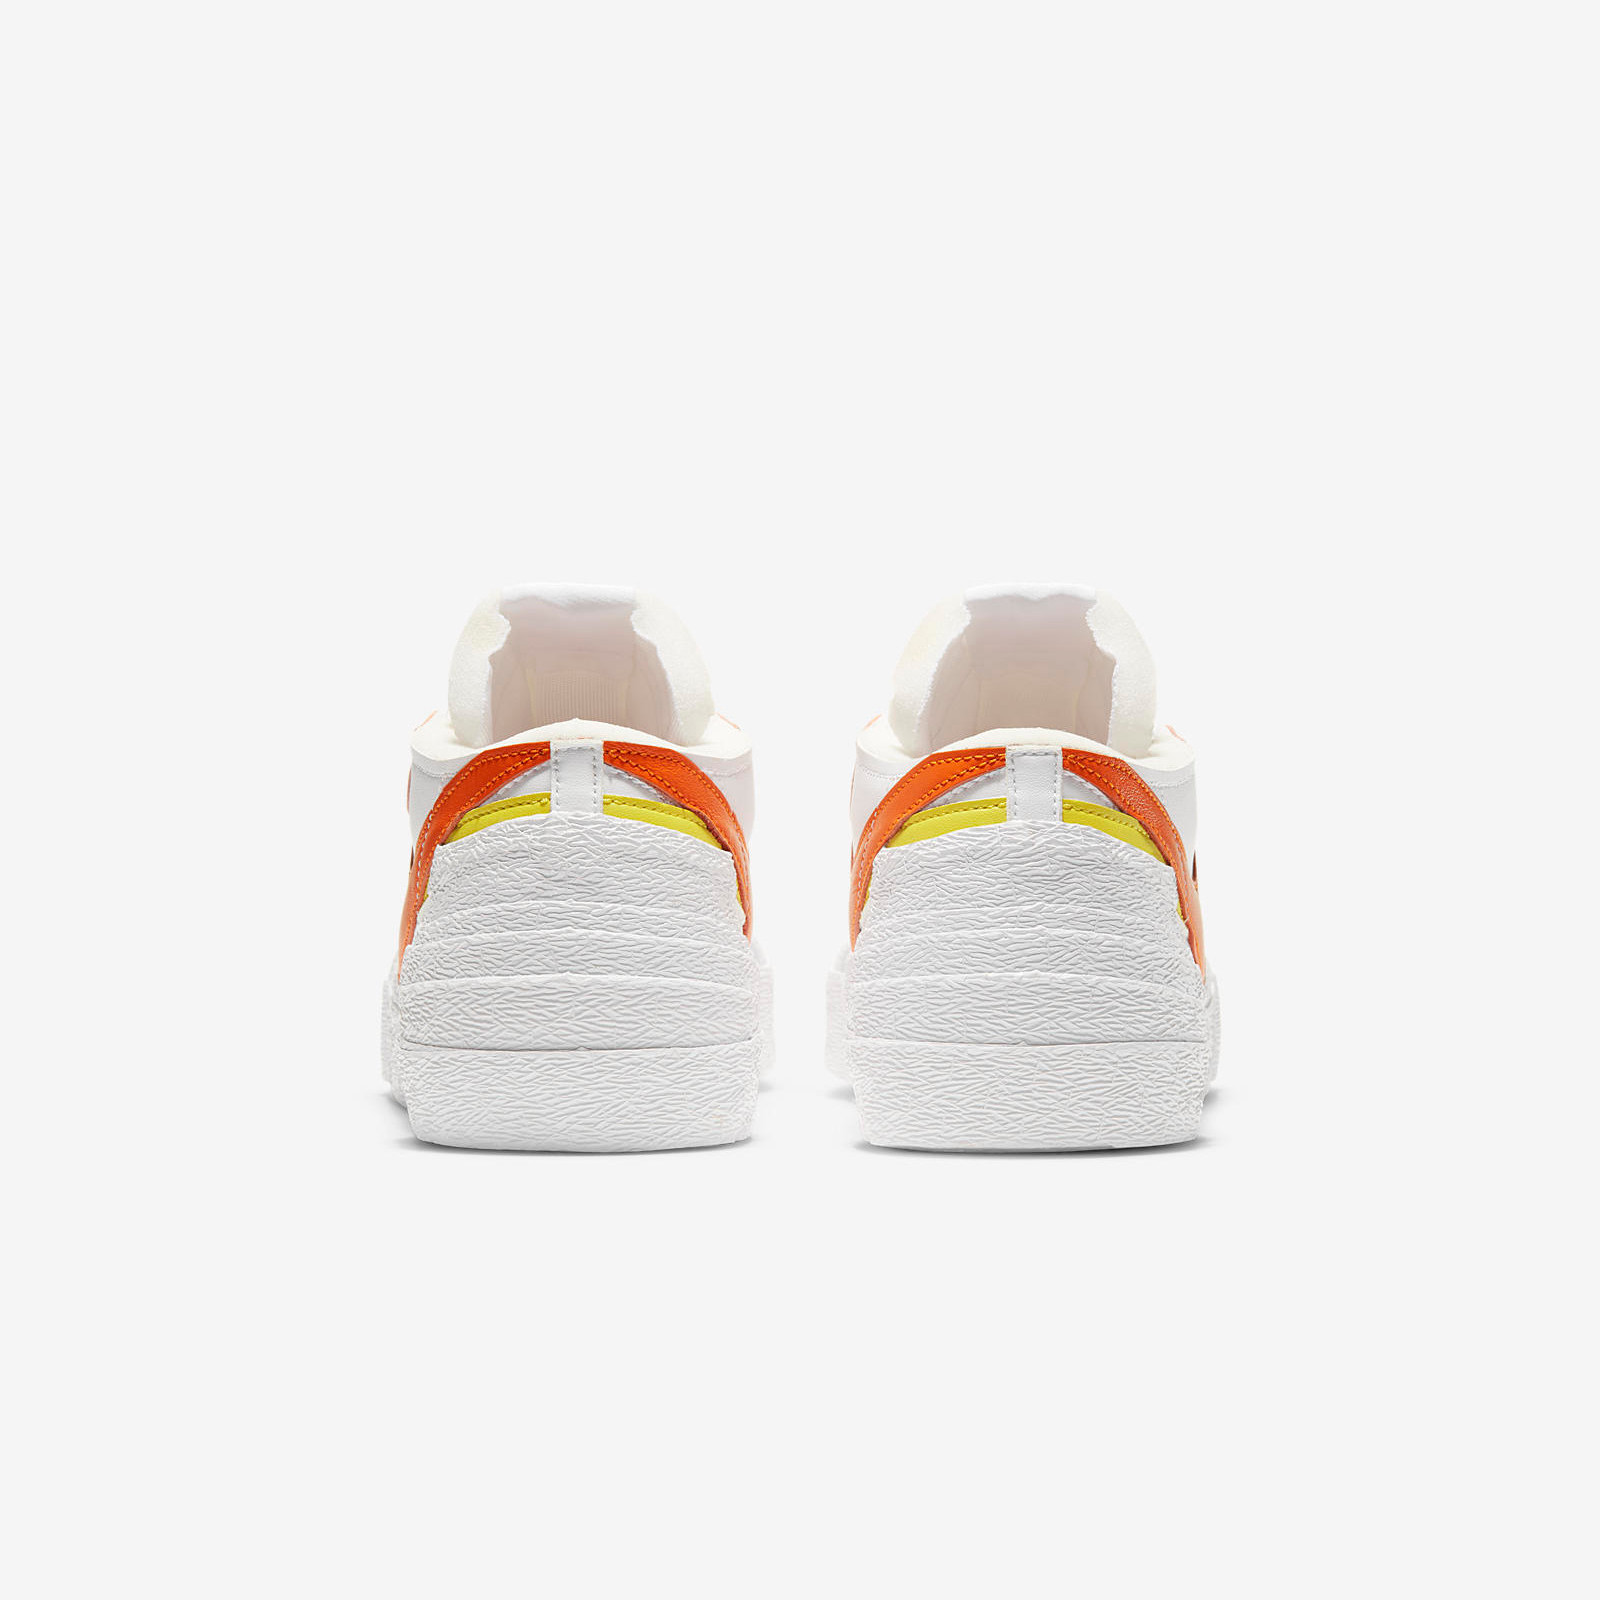 Nike x  Sacai
Blazer Low
Magma Orange